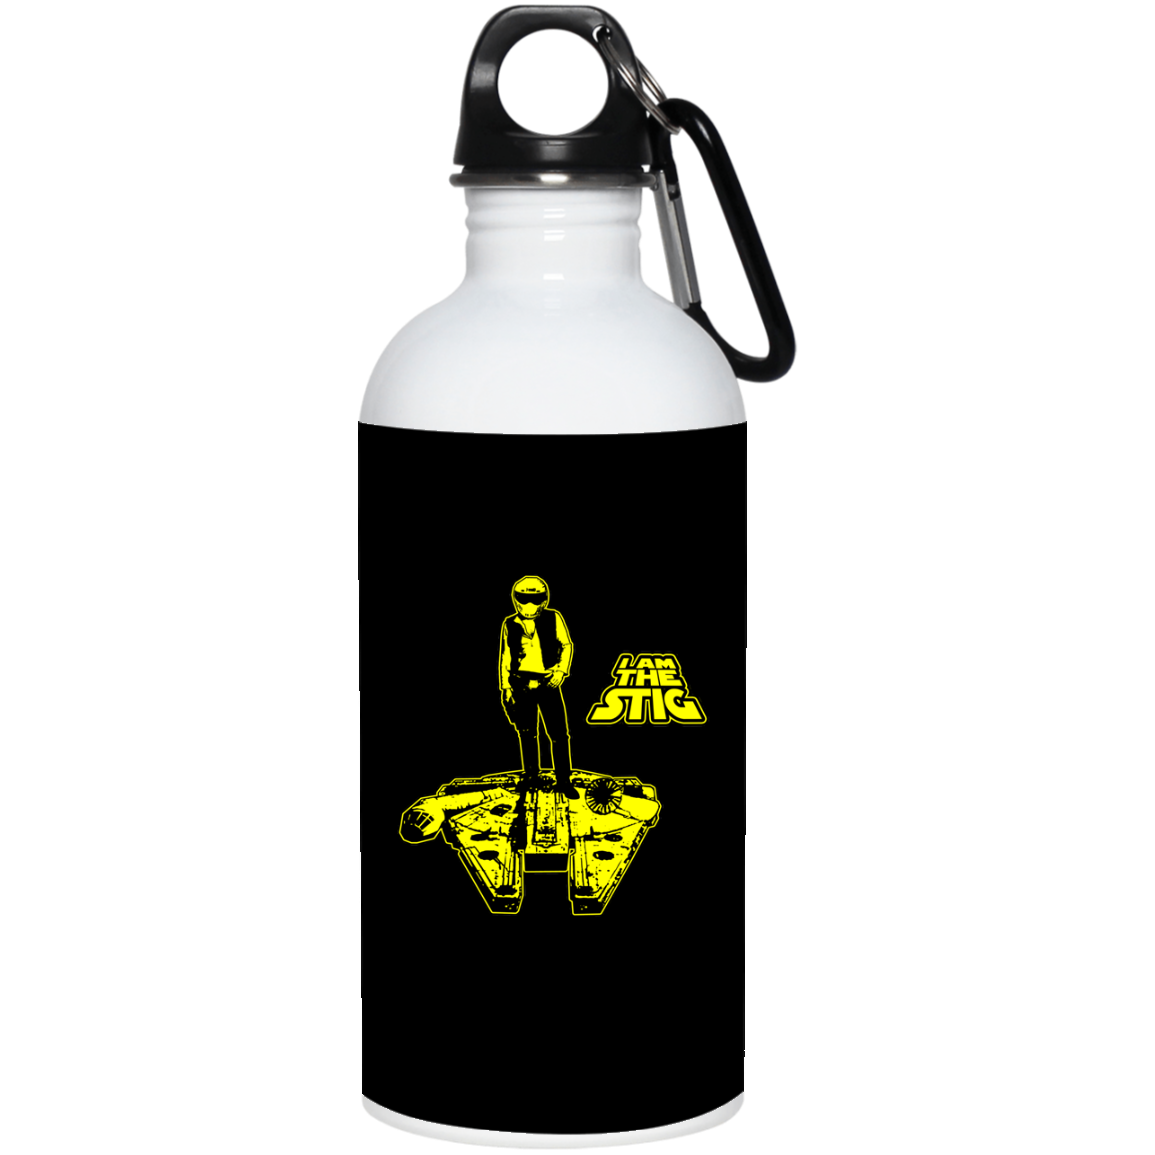 ArtichokeUSA Custom Design #39. Solo Stig - Stig/Star Wars Parody. TV Music Movies. 20 oz. Stainless Steel Water Bottle